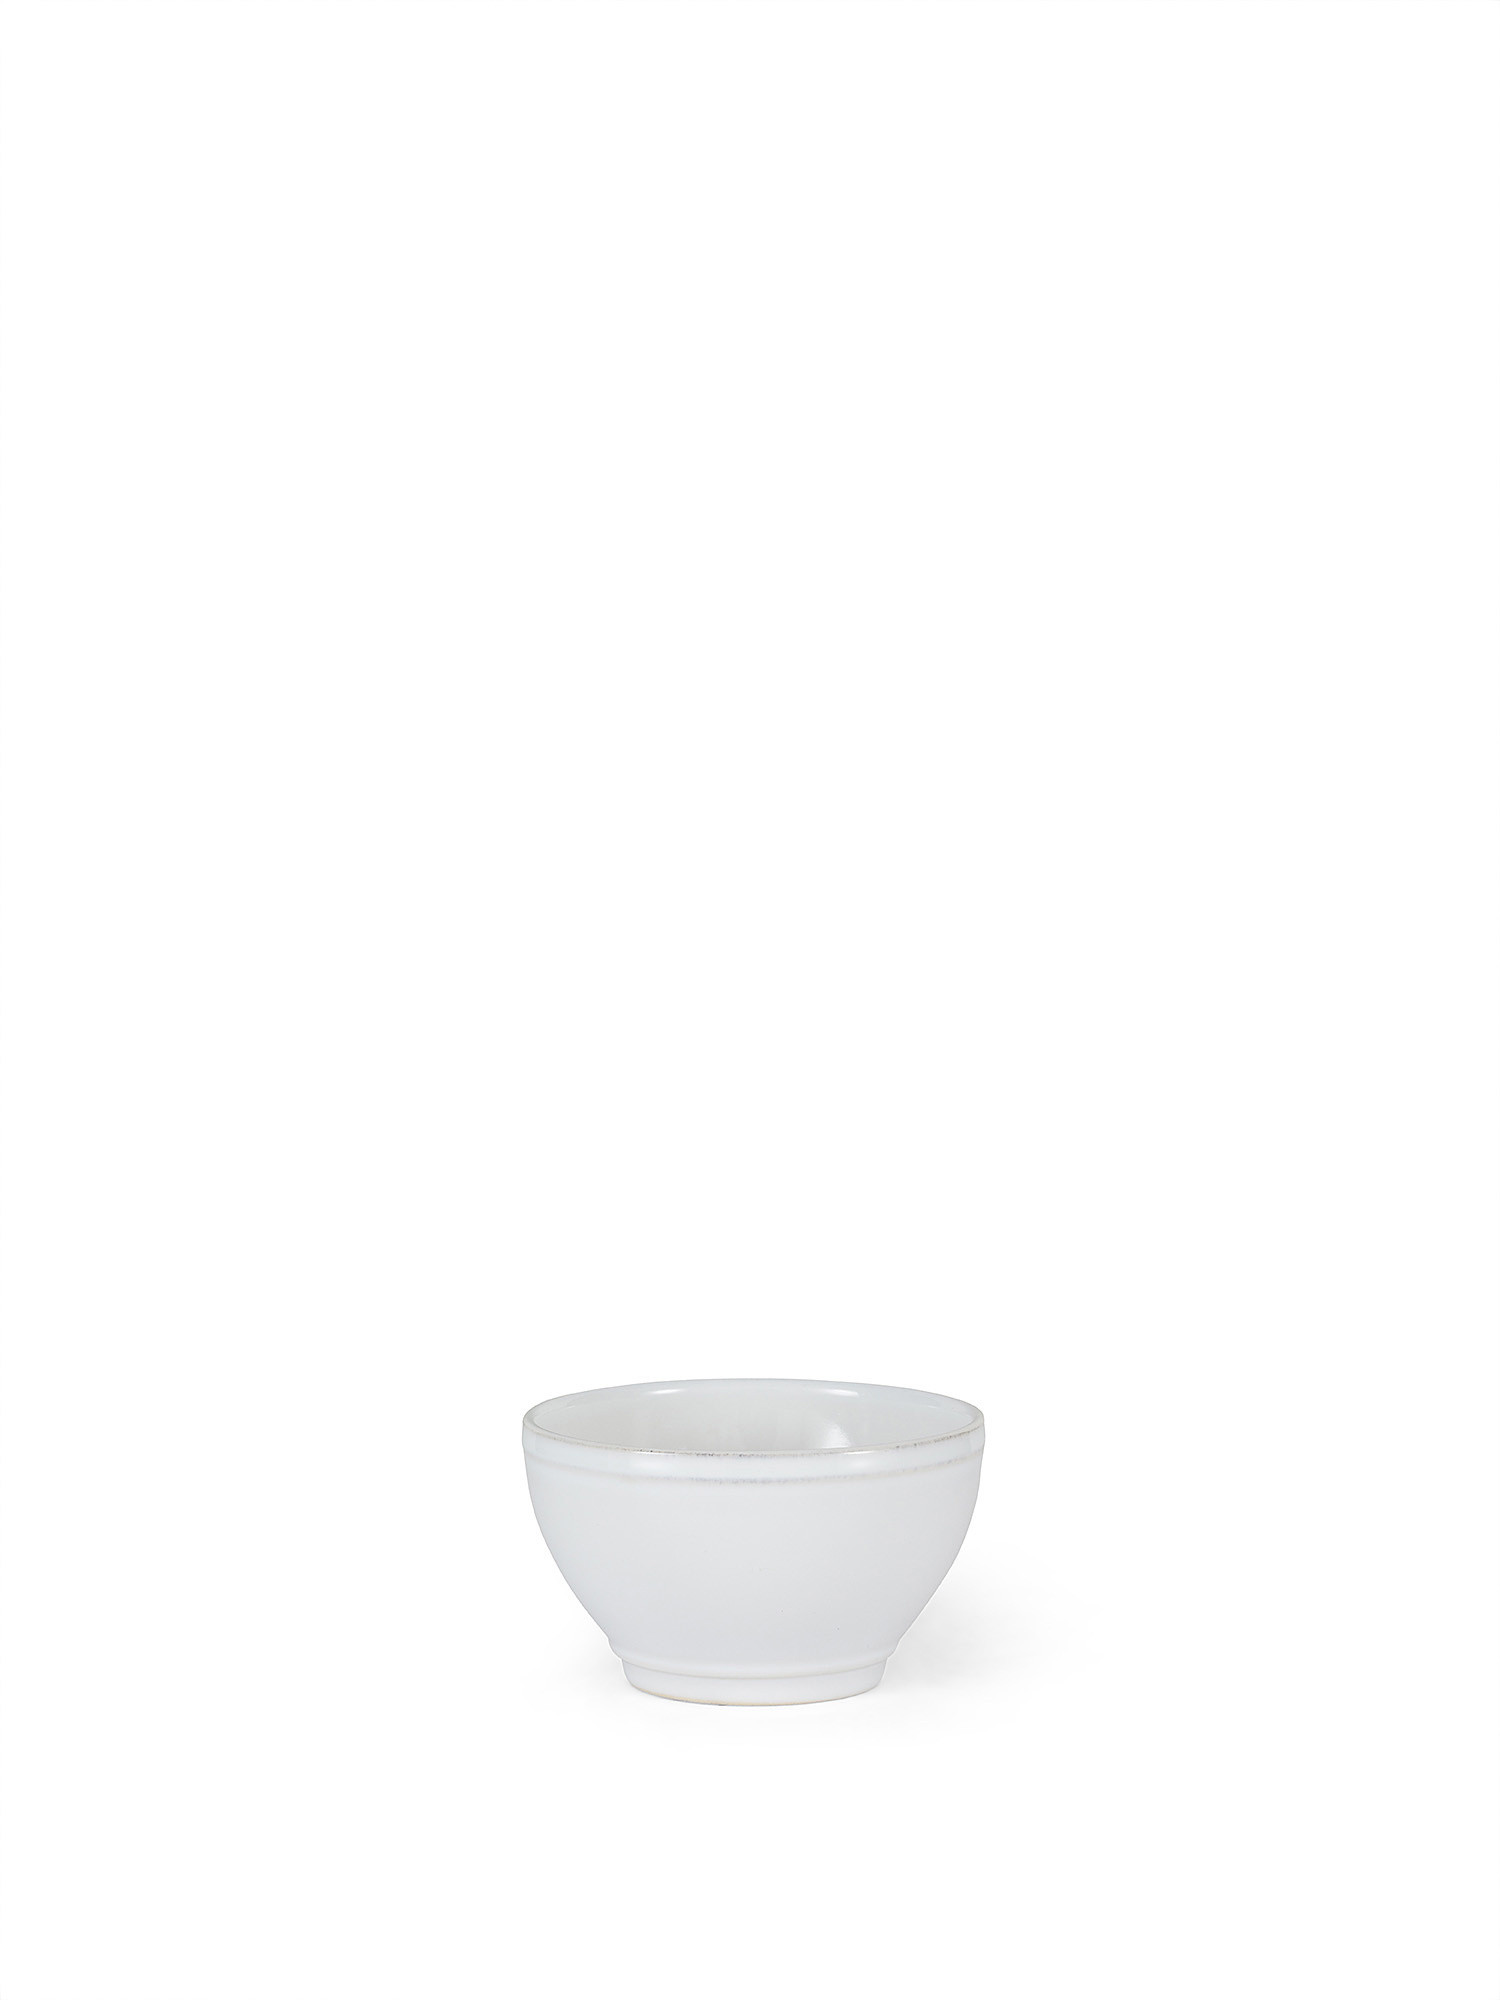 Friso ceramic bowl, White, large image number 0